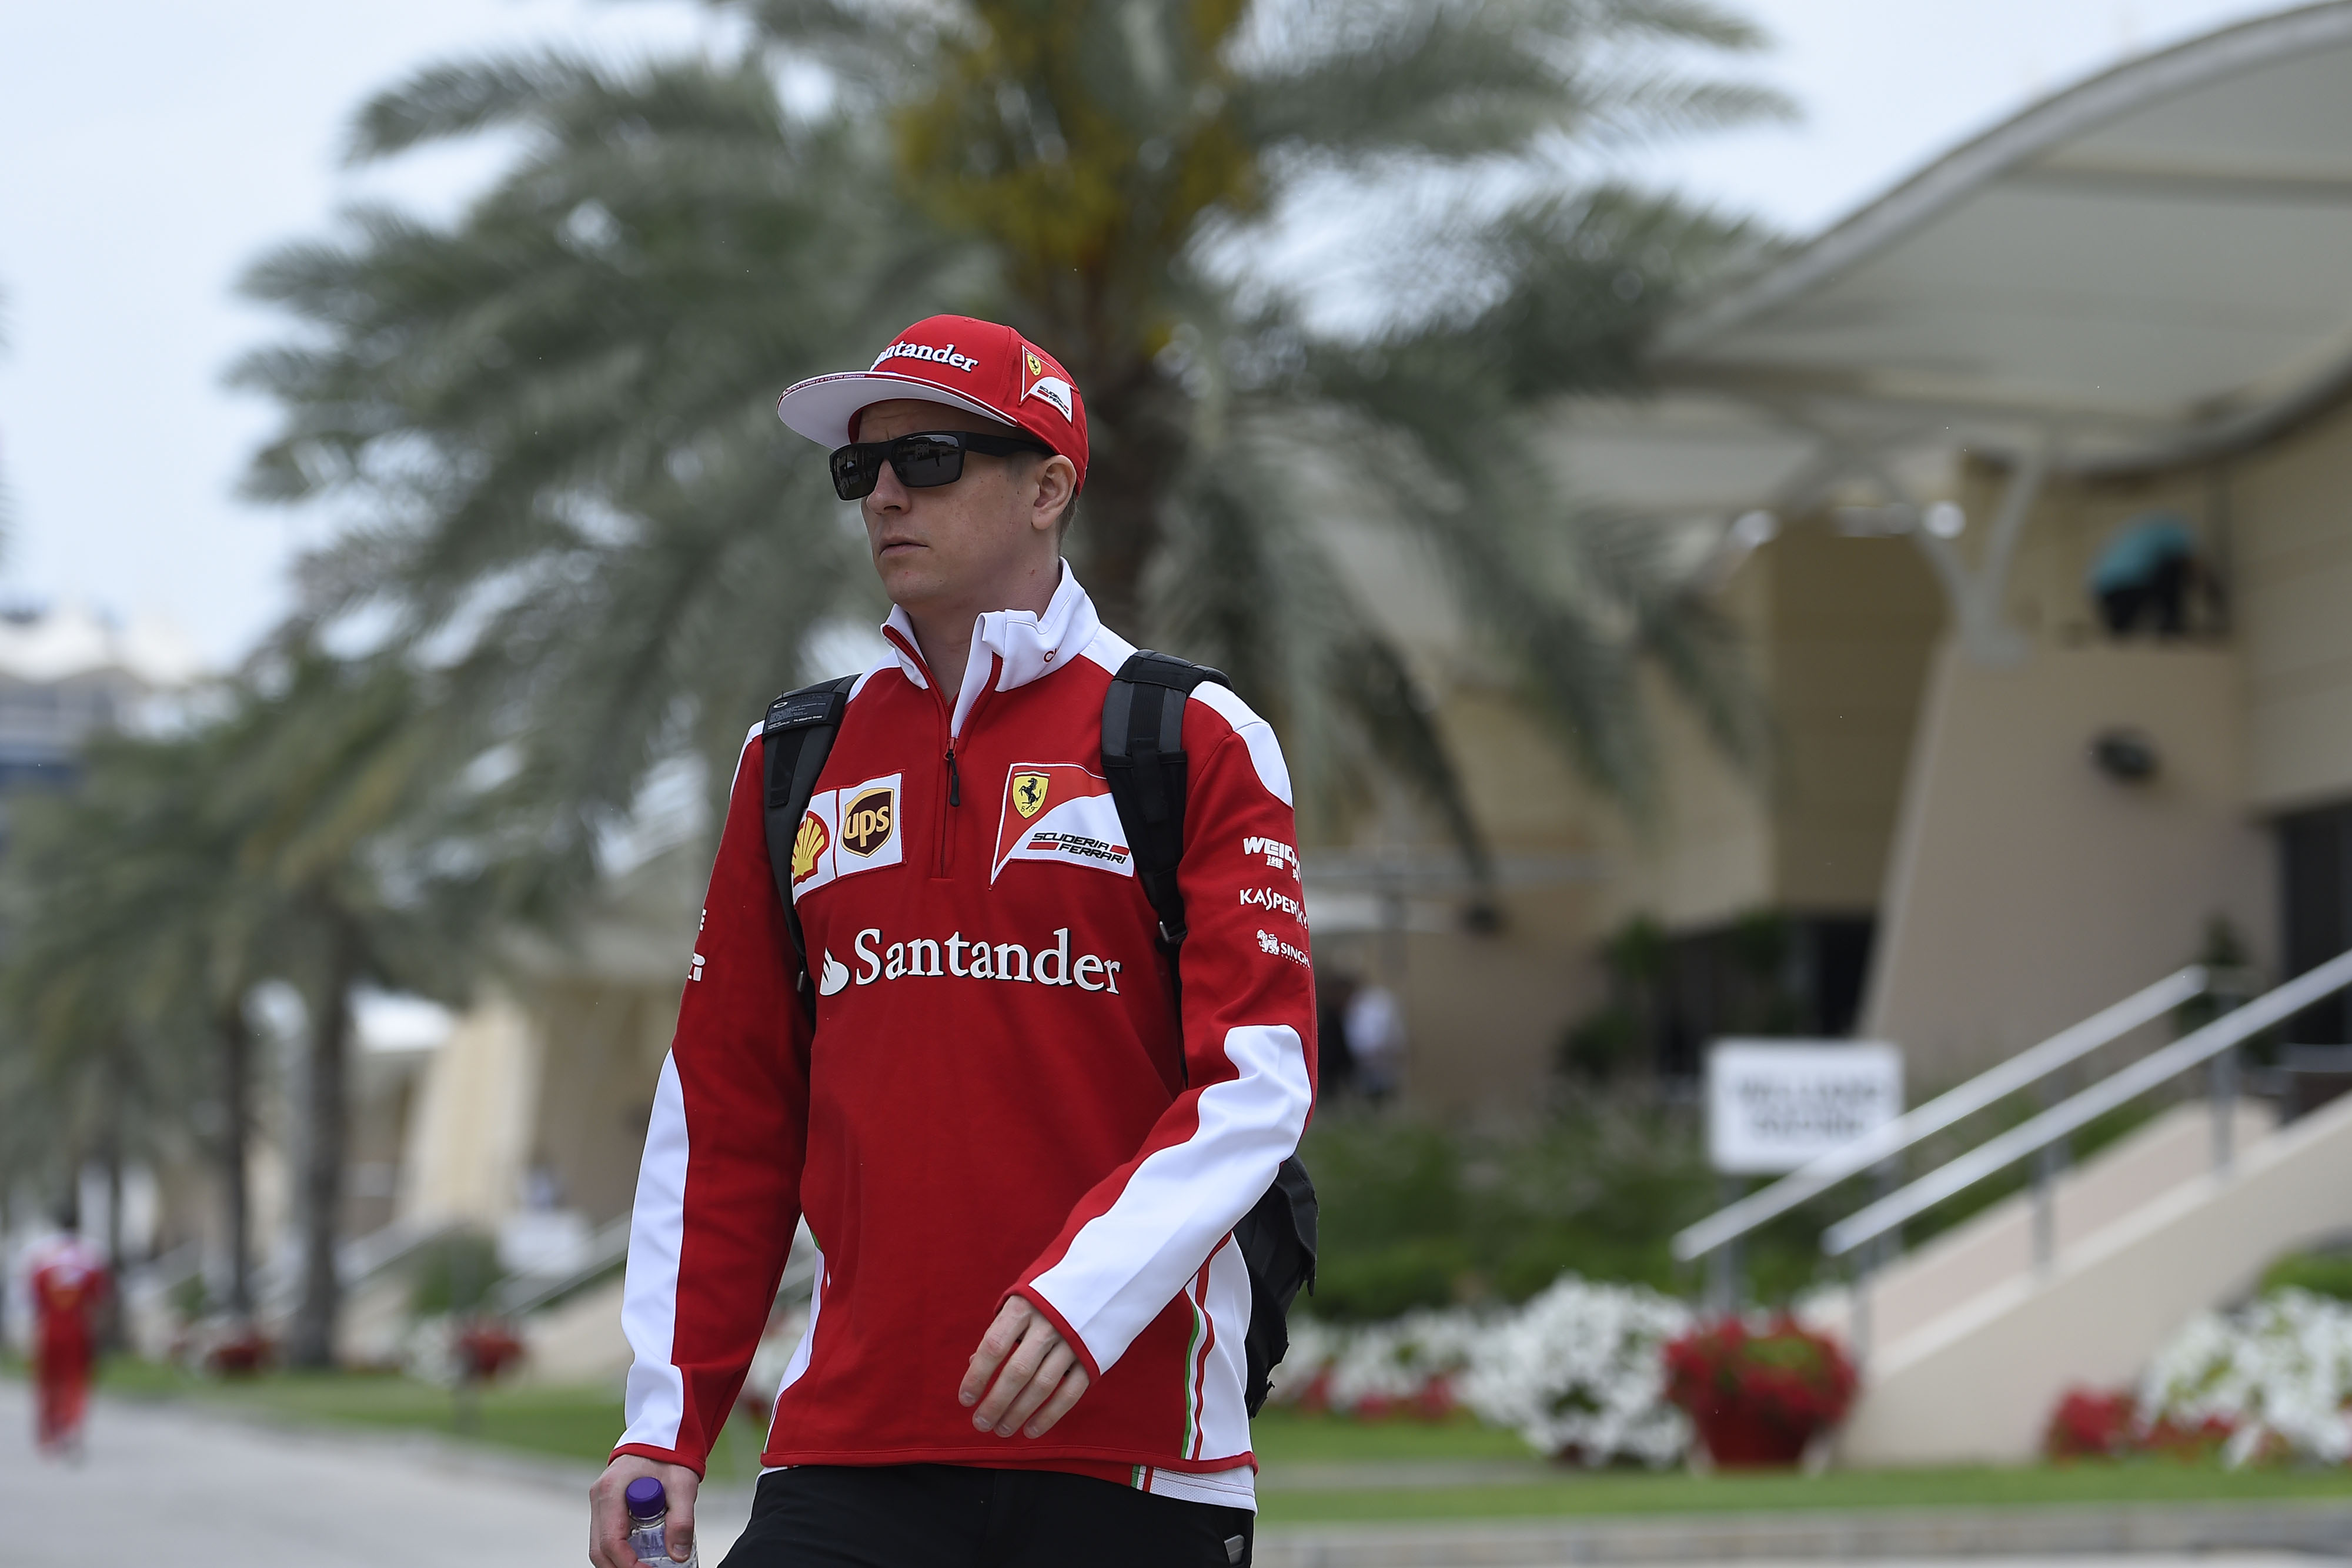 Ferrari's Kimi Raikkonen cuts a relaxed figure at Sakhir ahead of the track action.